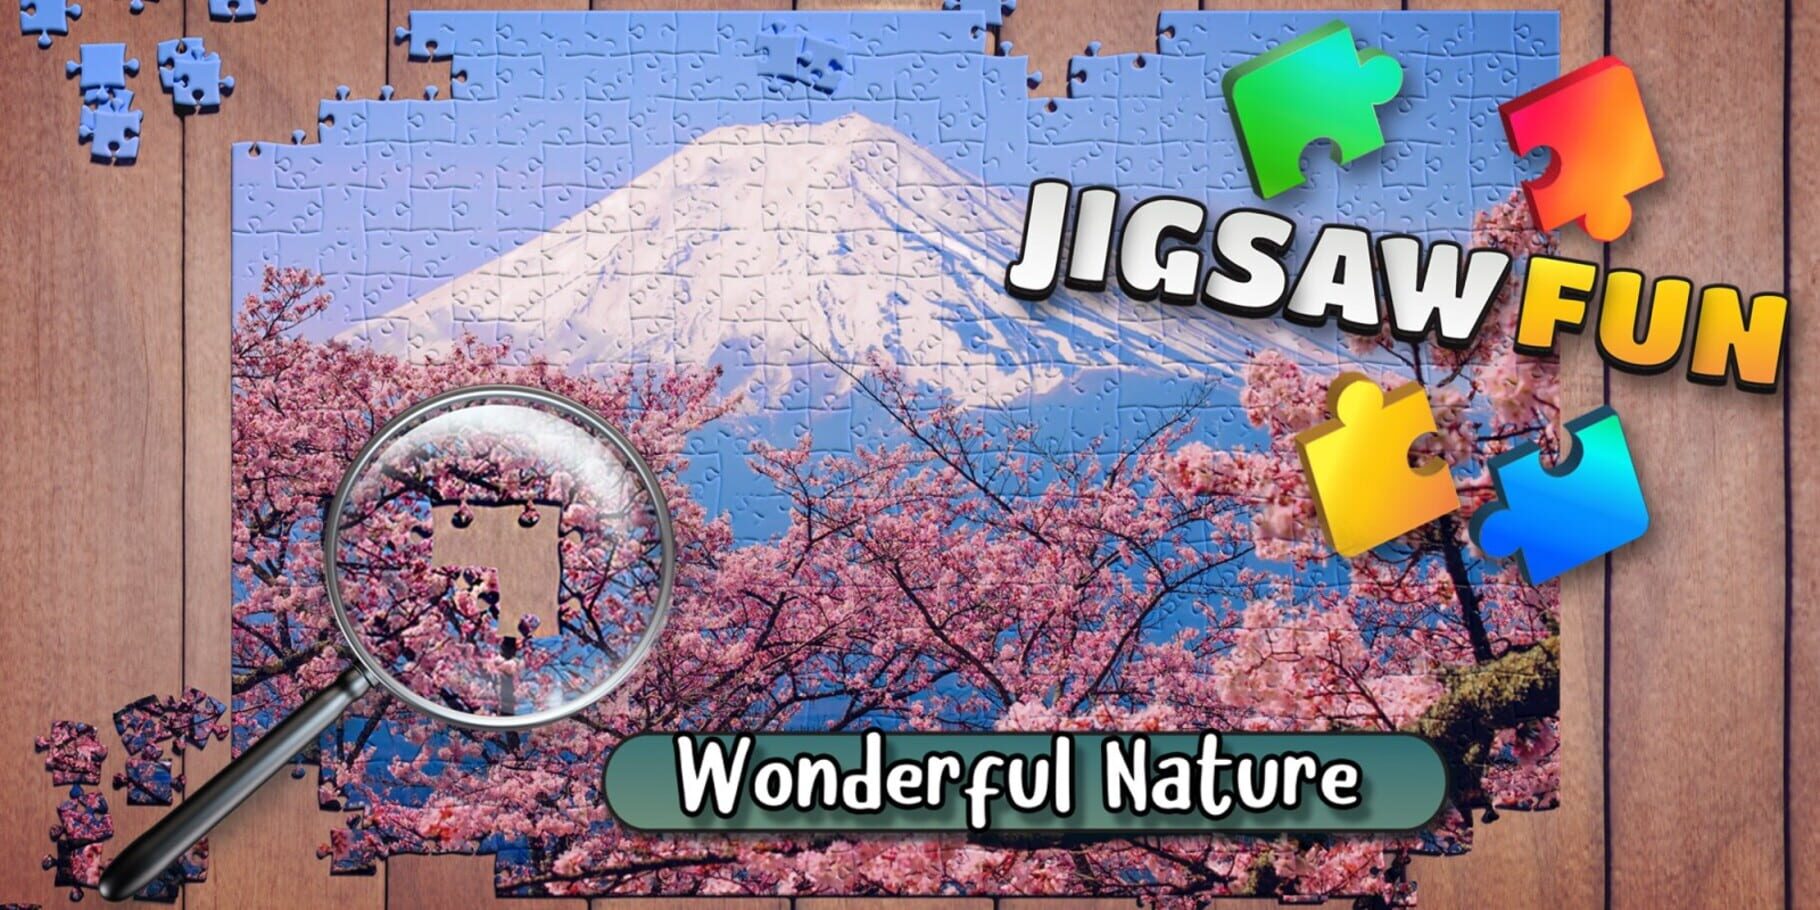 Jigsaw Fun: Wonderful Nature artwork